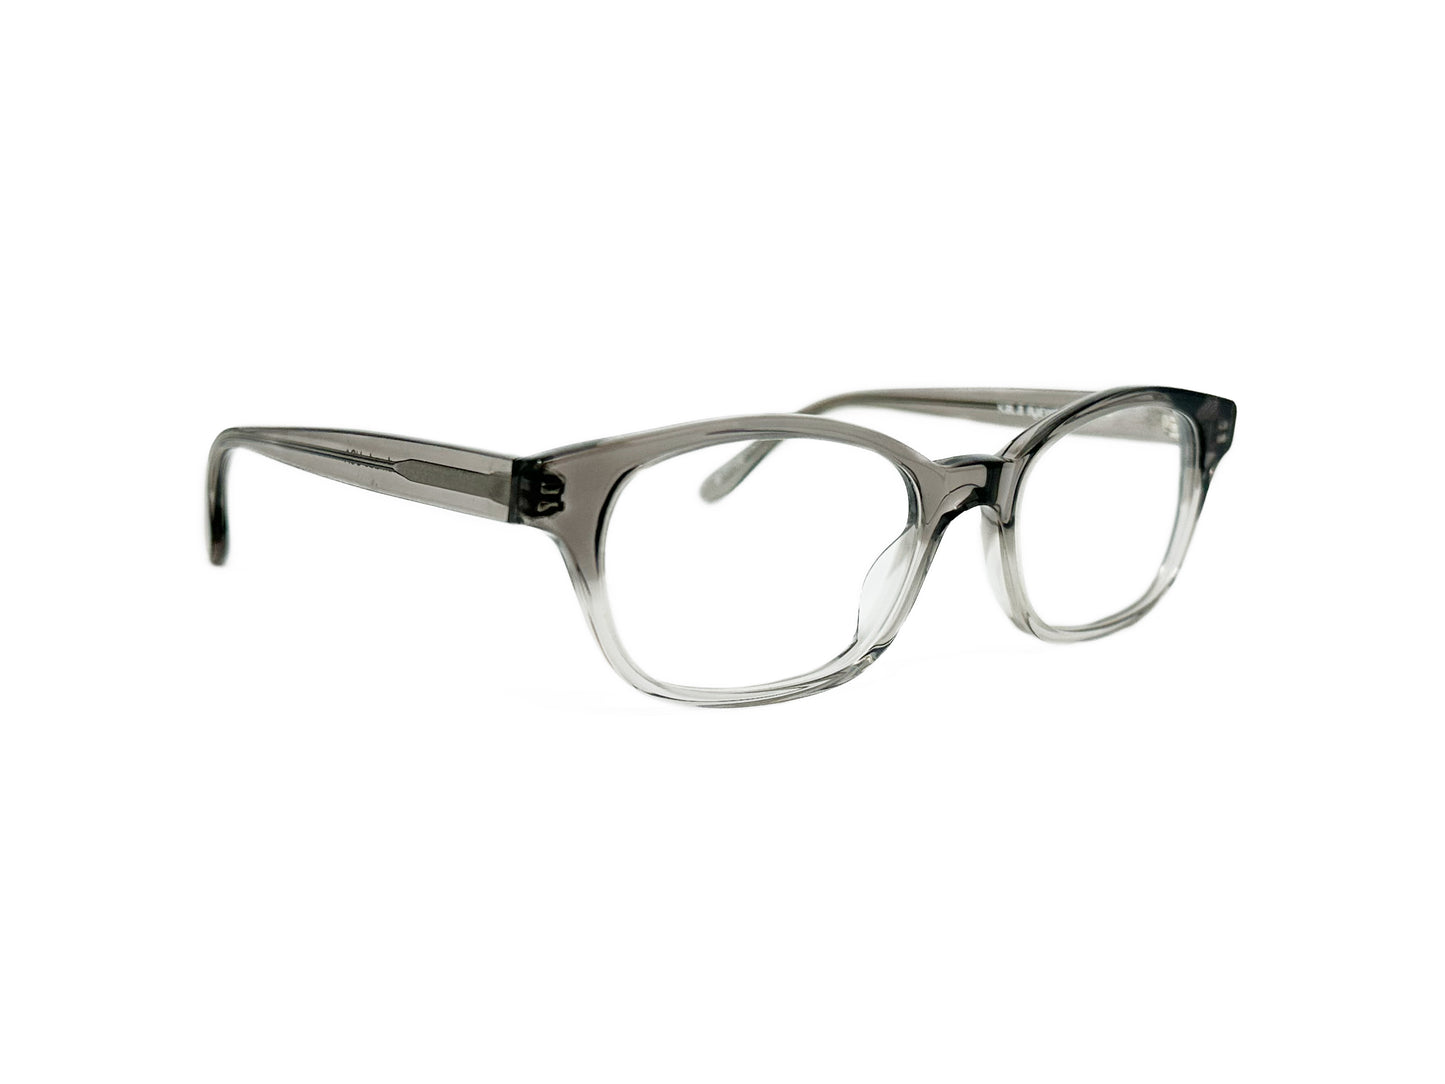 Kala Eyewear rectangular acetate optical frame. Model: Morgan. Color: FG- Grey to clear gradient. Side view.